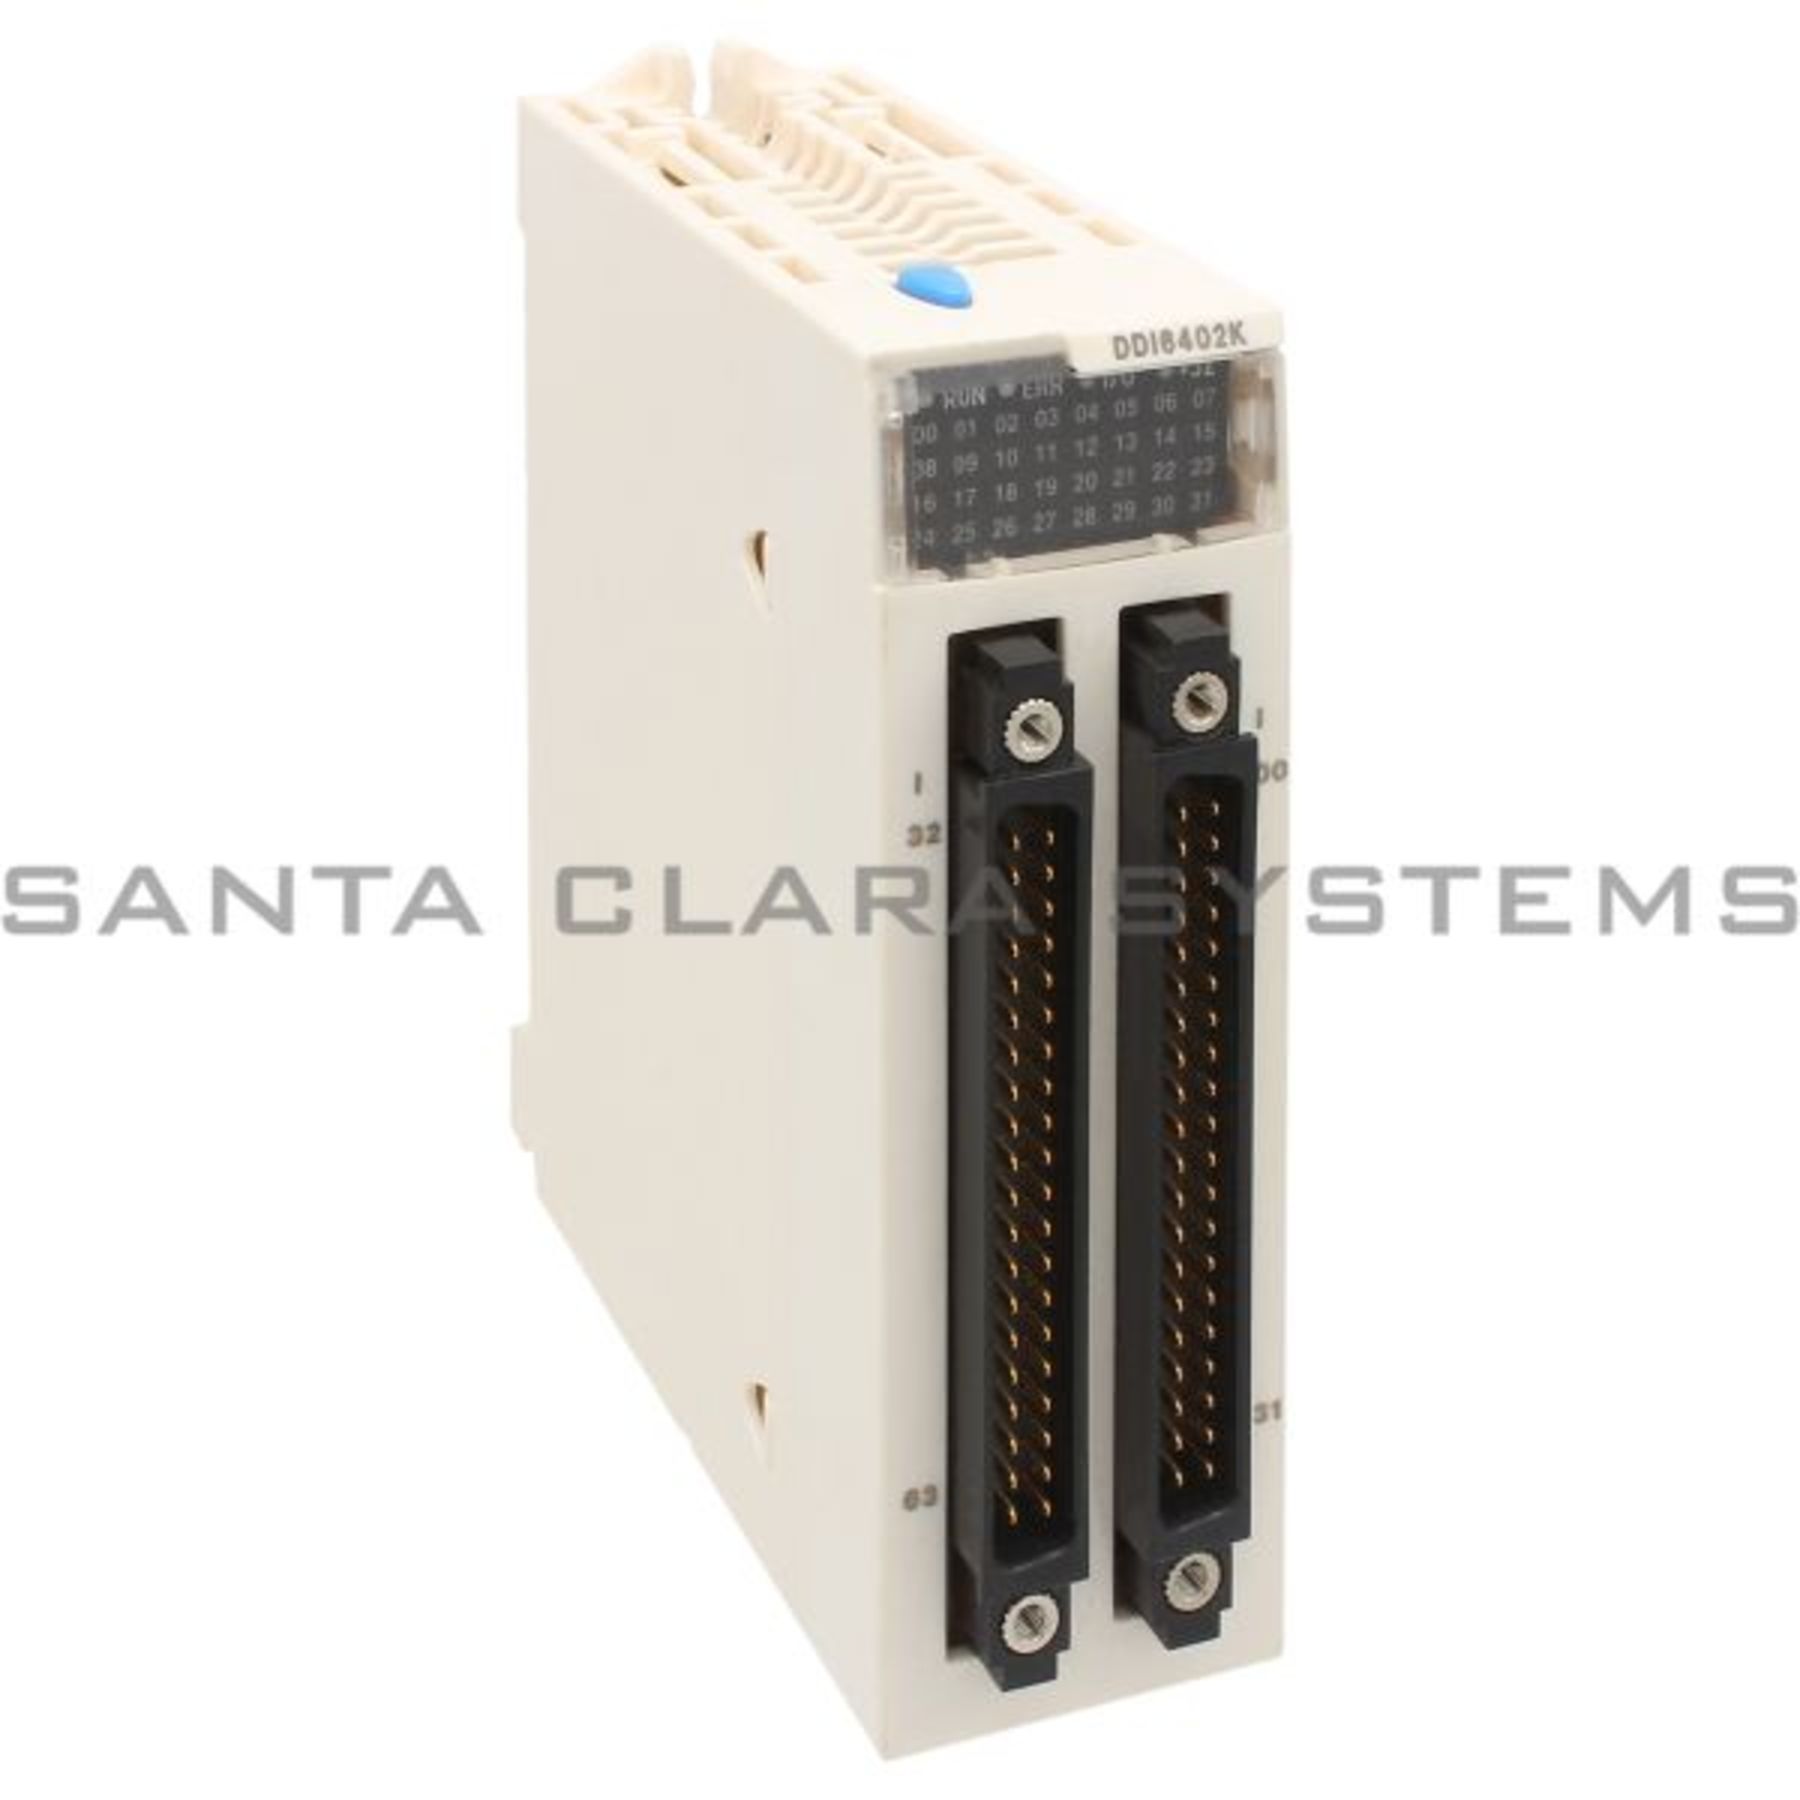 BMXDD16402K Modicon Discrete Input Module - Santa Clara Systems